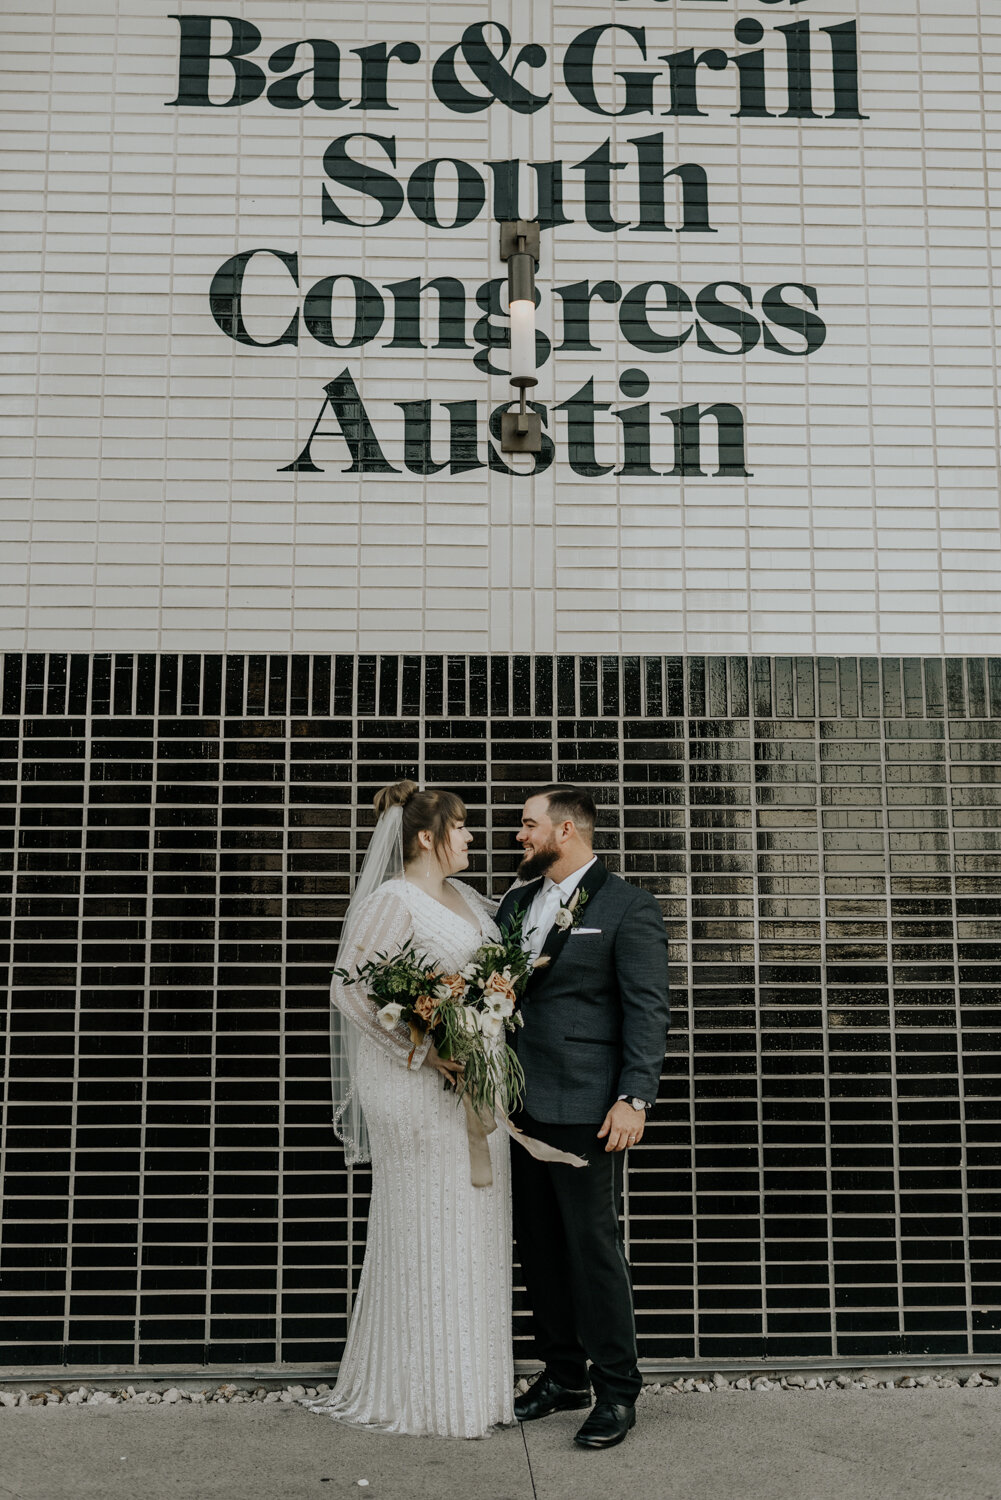 South Congress Hotel in Austin, Texas Wedding Photographer